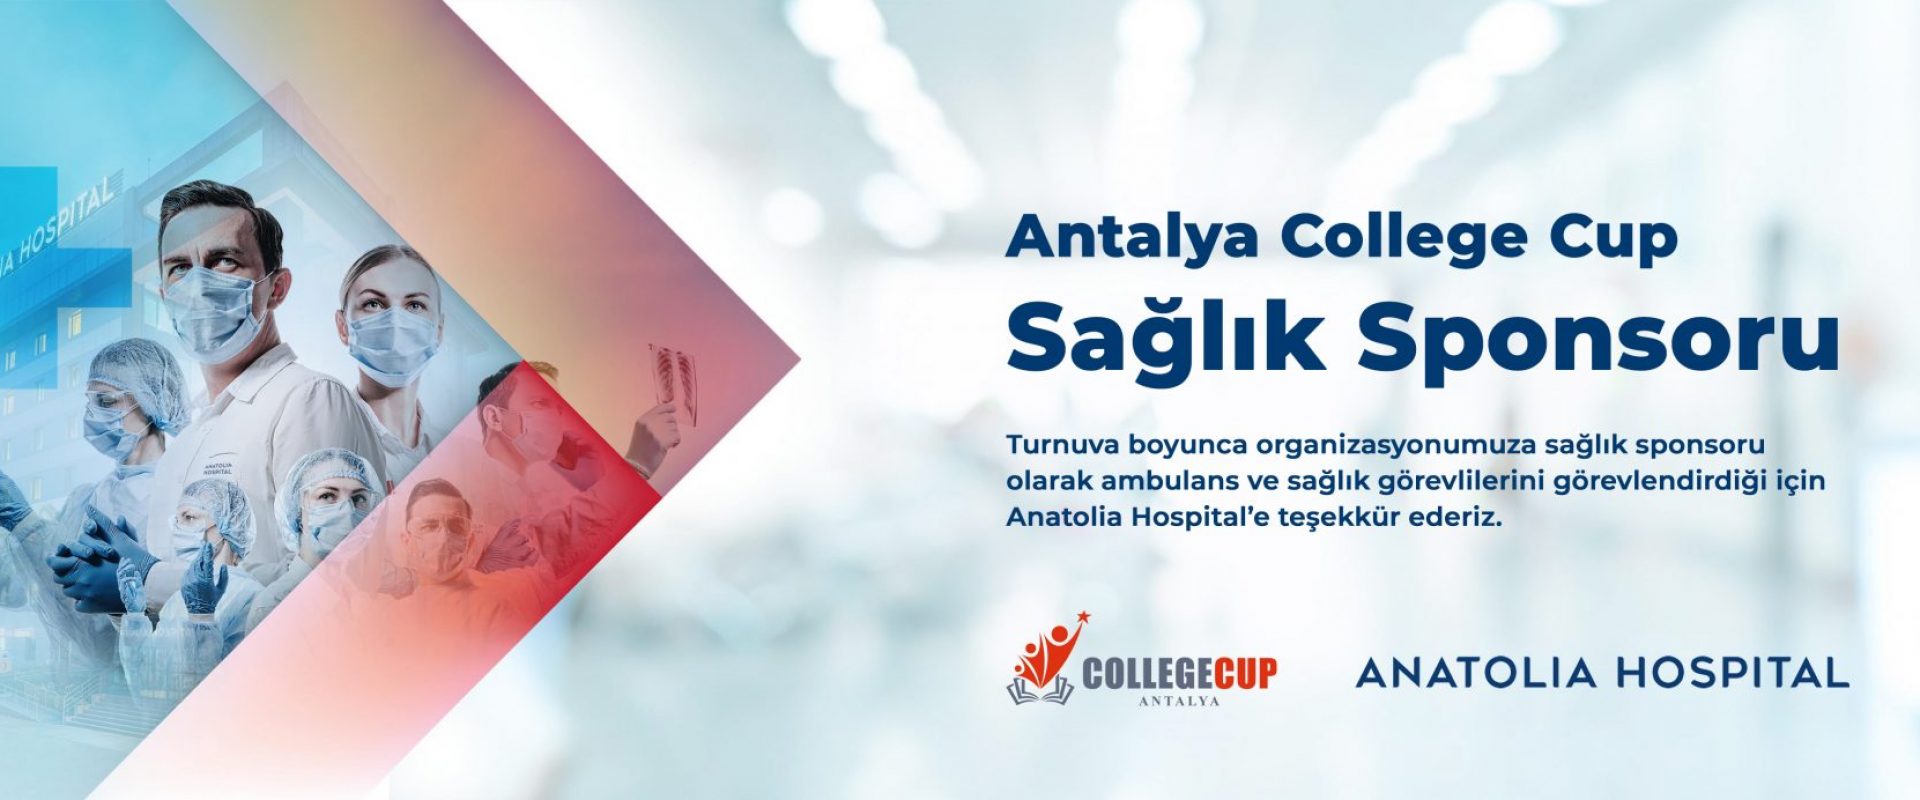 anatoliahospital-banner